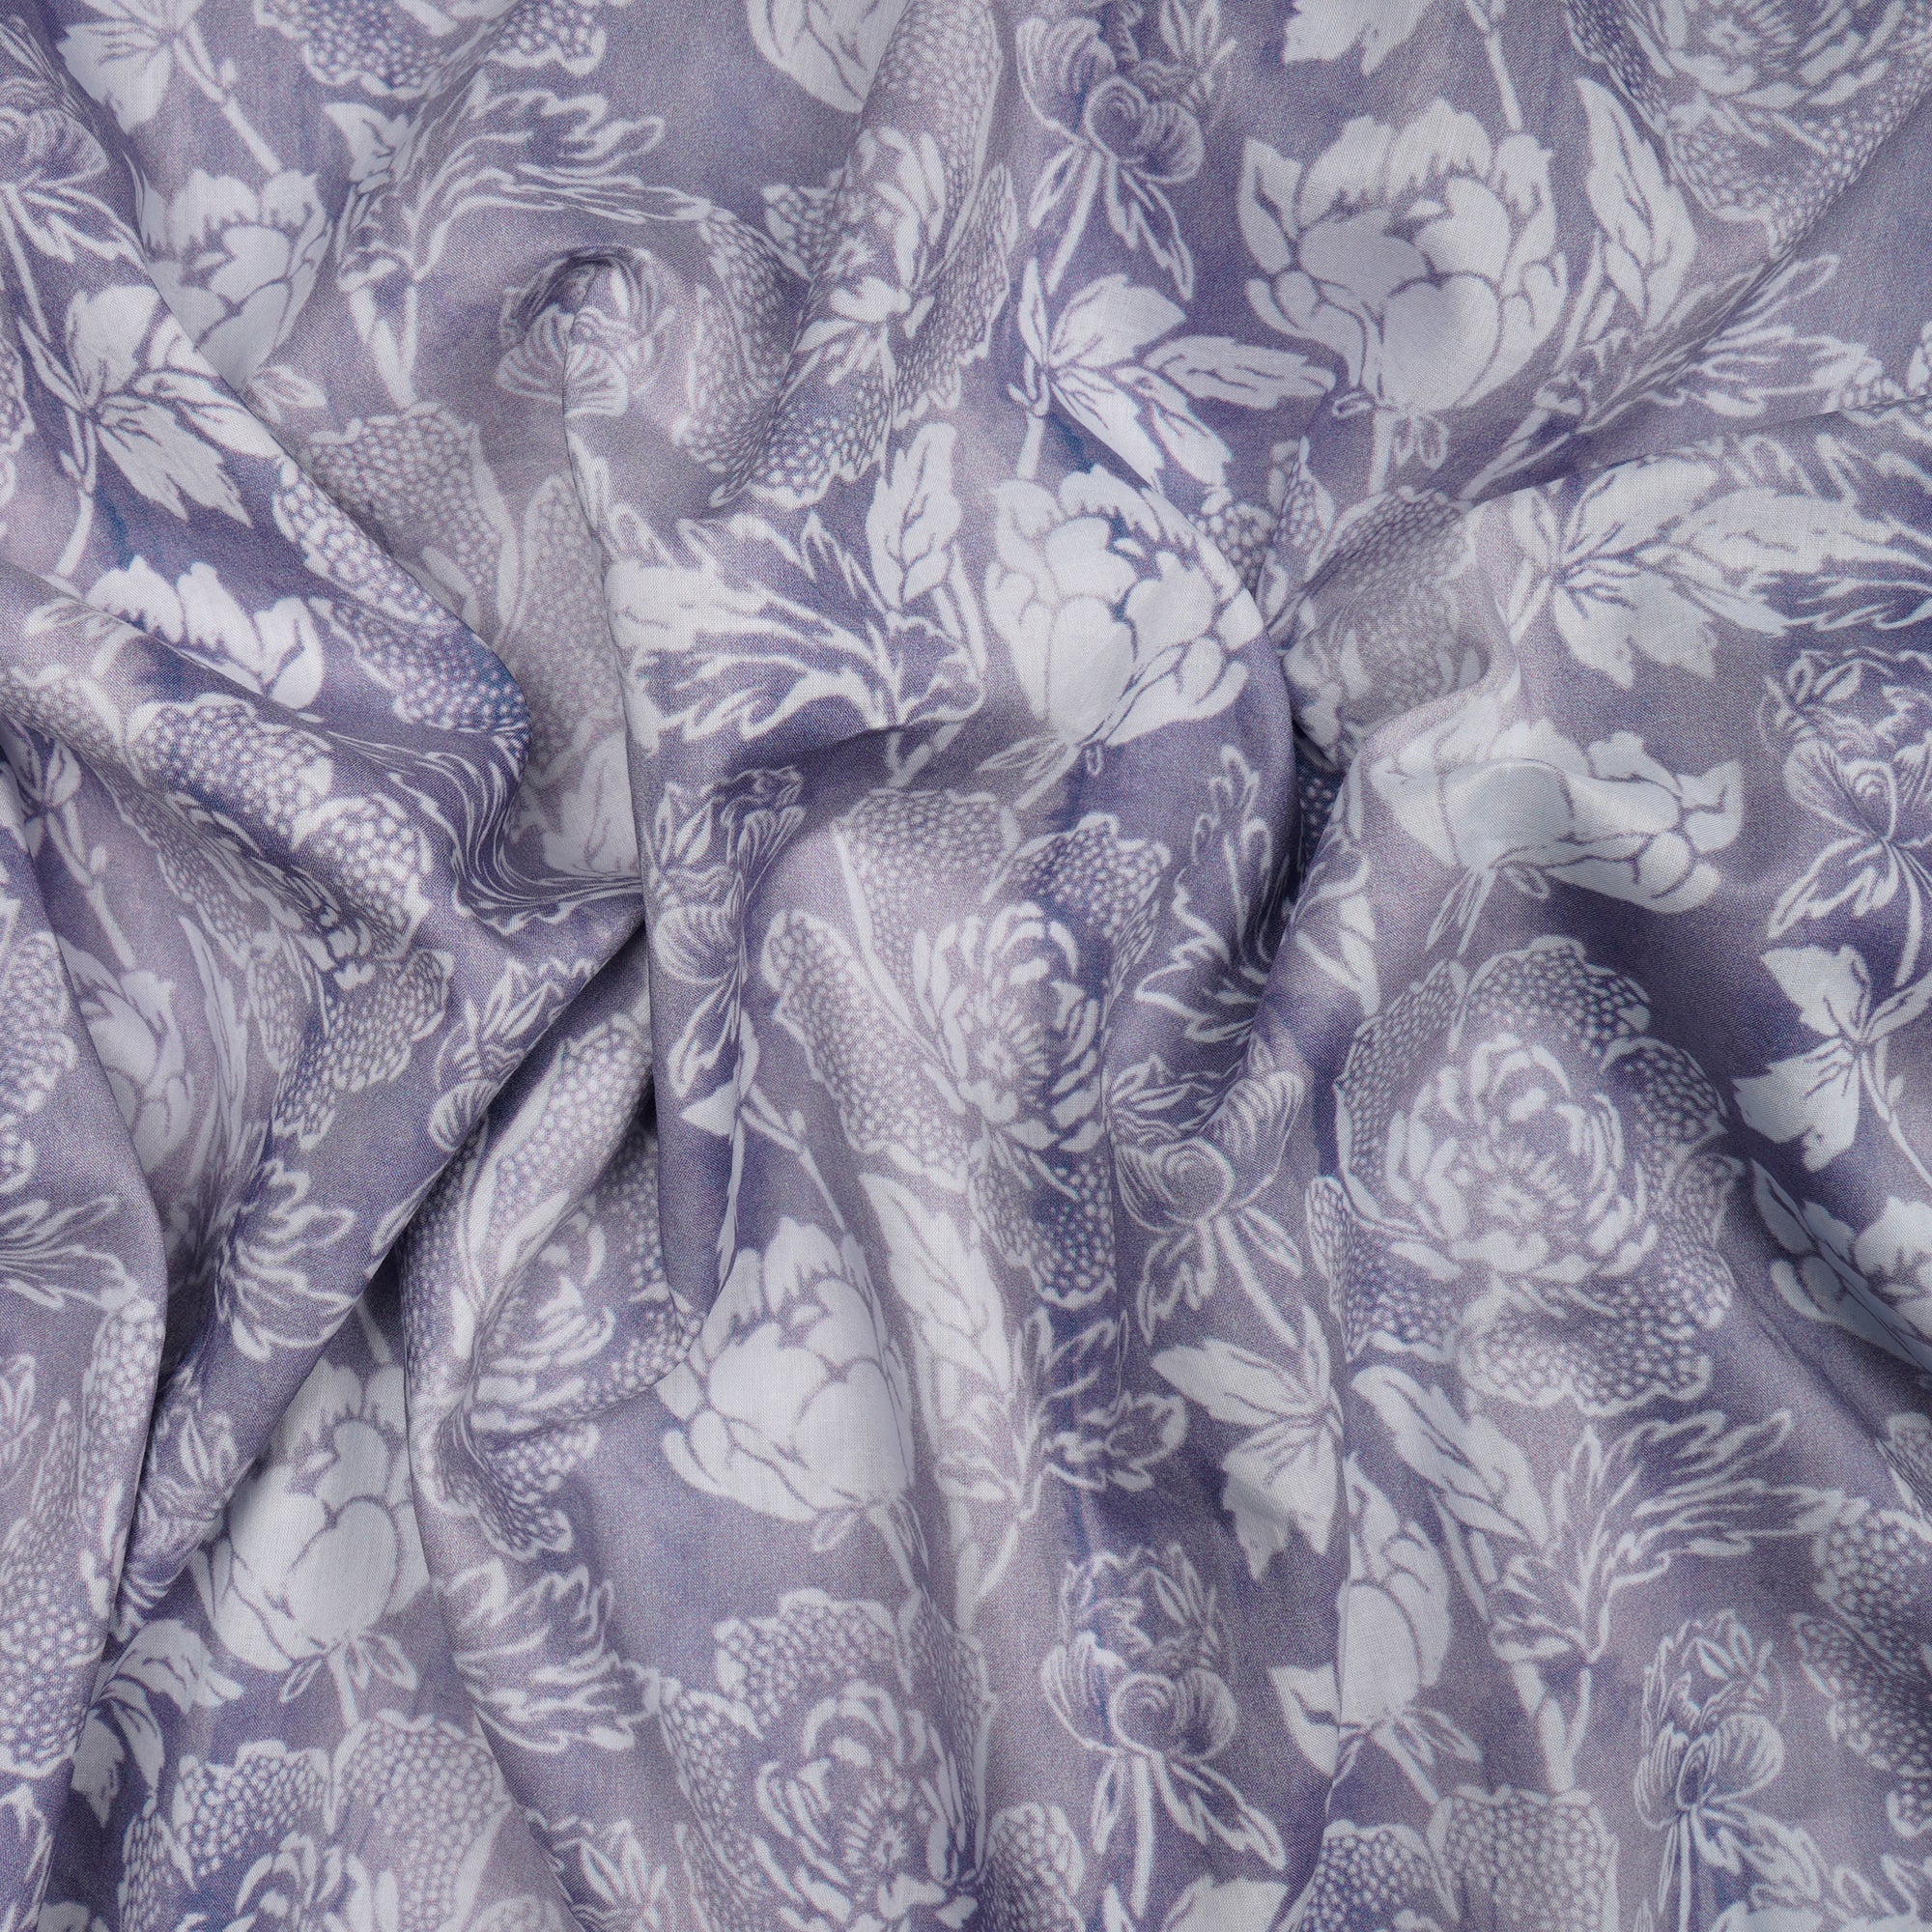 White-Lavender Floral Pattern Digital Print Lawn Fabric